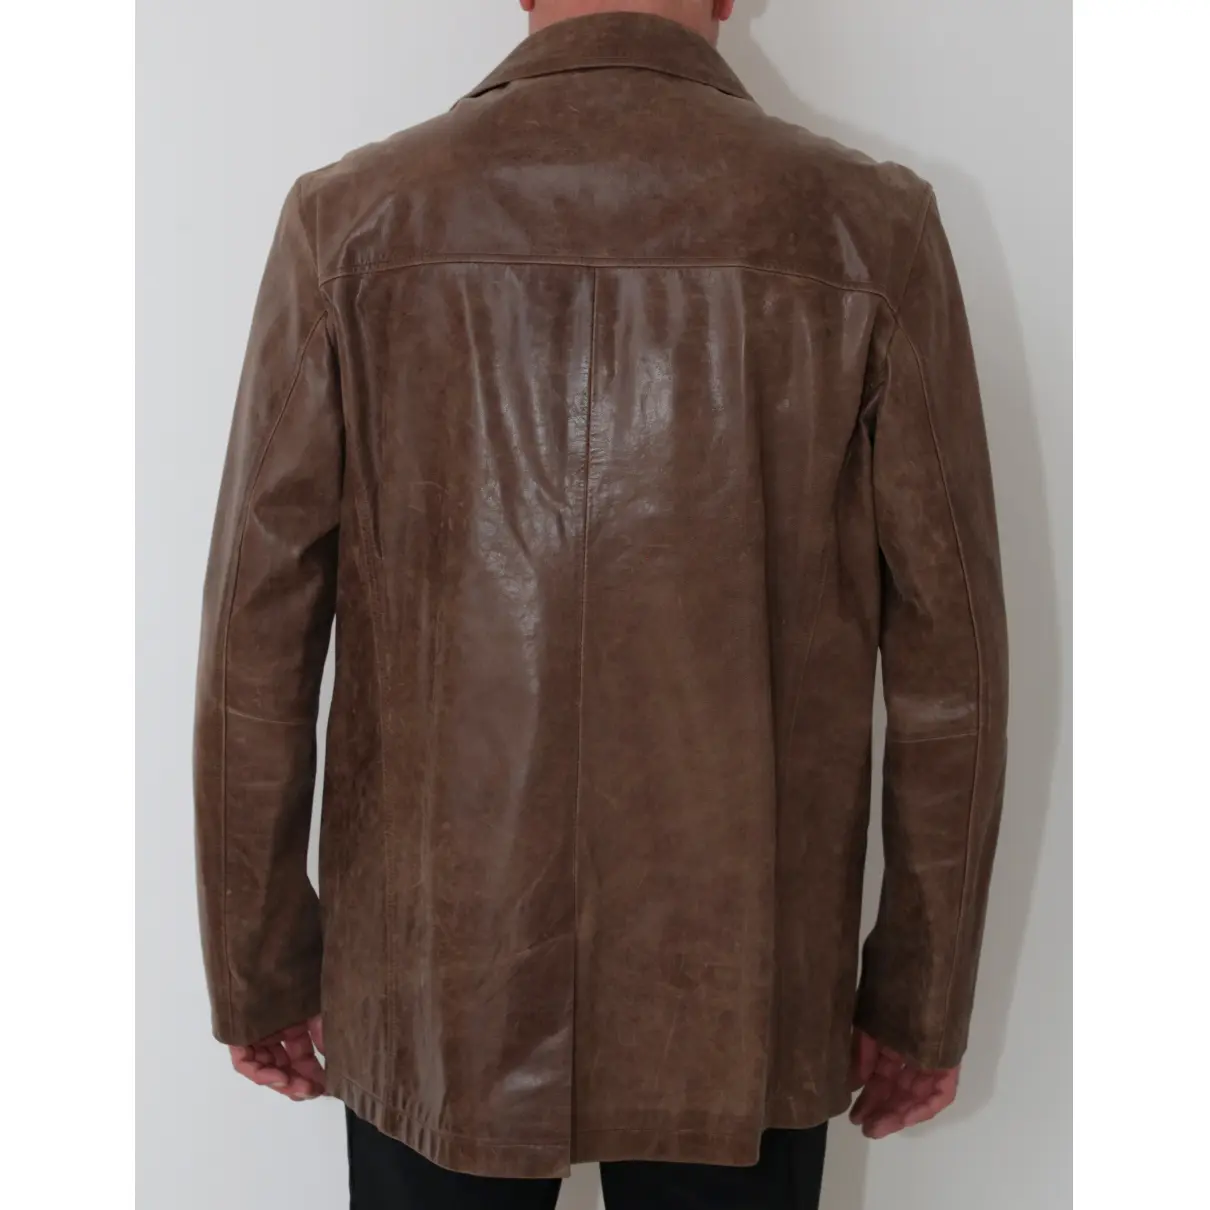 Leather vest Boss - Vintage